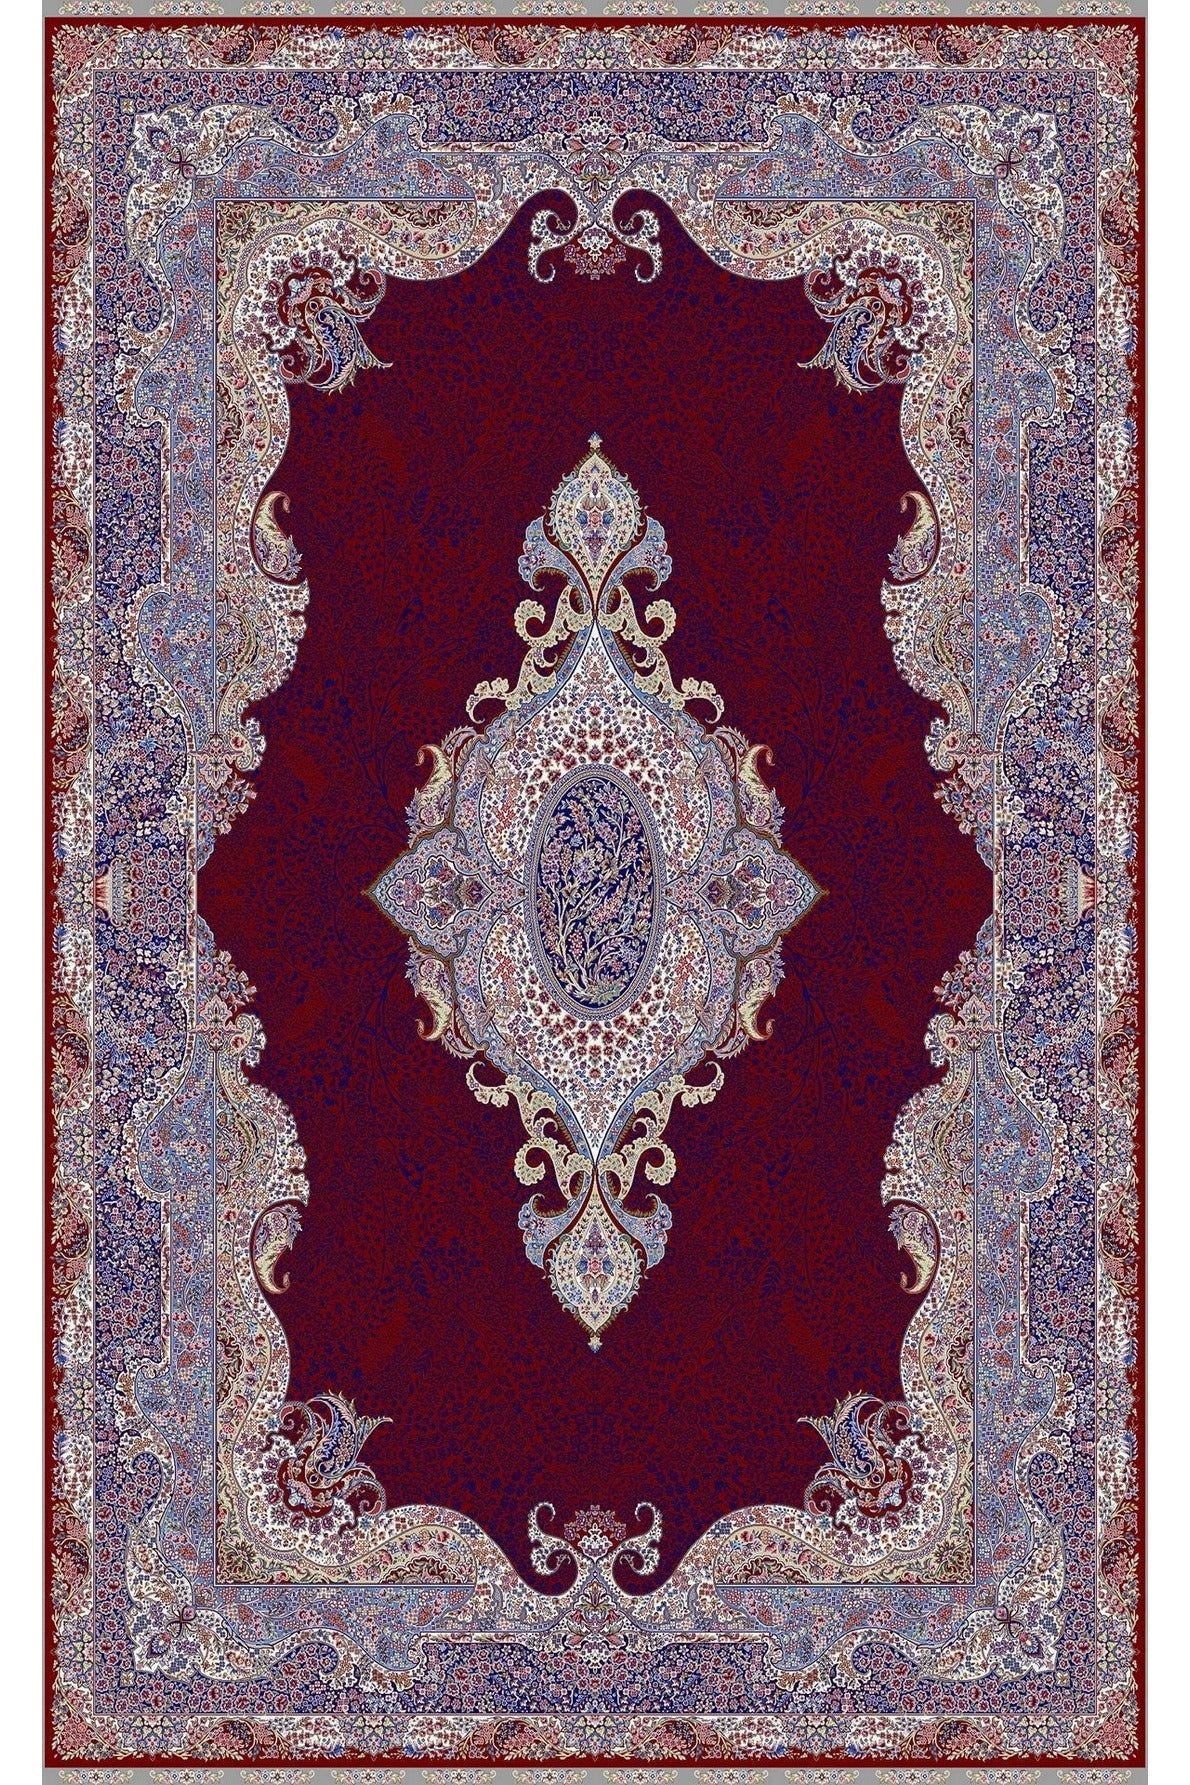 #Turkish_Carpets_Rugs# #Modern_Carpets# #Abrash_Carpets#Isf 02 Red